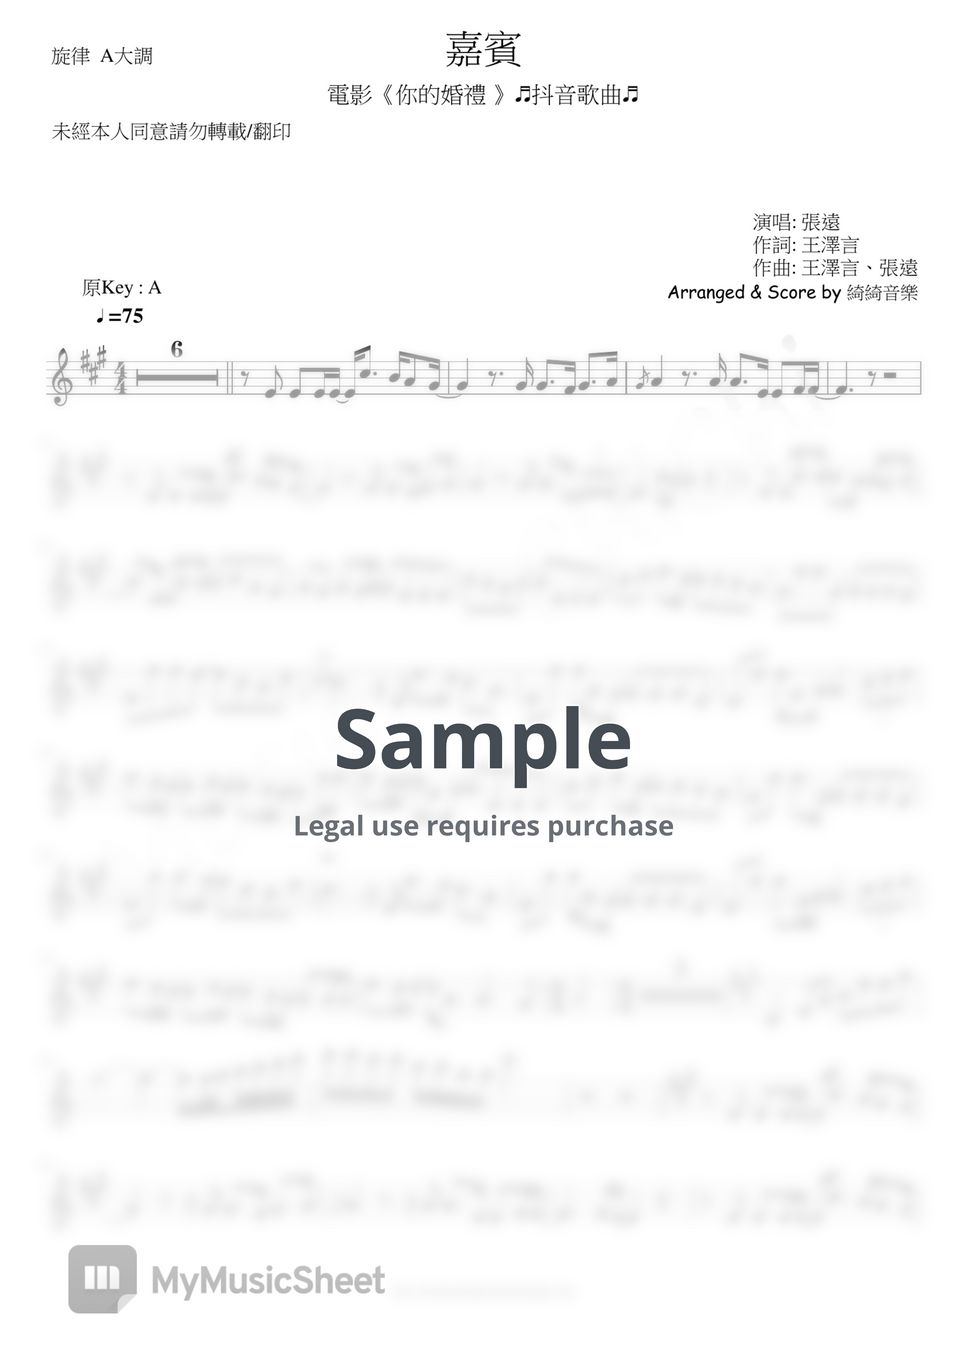 [電影~你的婚禮] 張遠 - 嘉賓 (in  A  Flute/Violin Melody) by 綺綺音樂 MusicChiChi